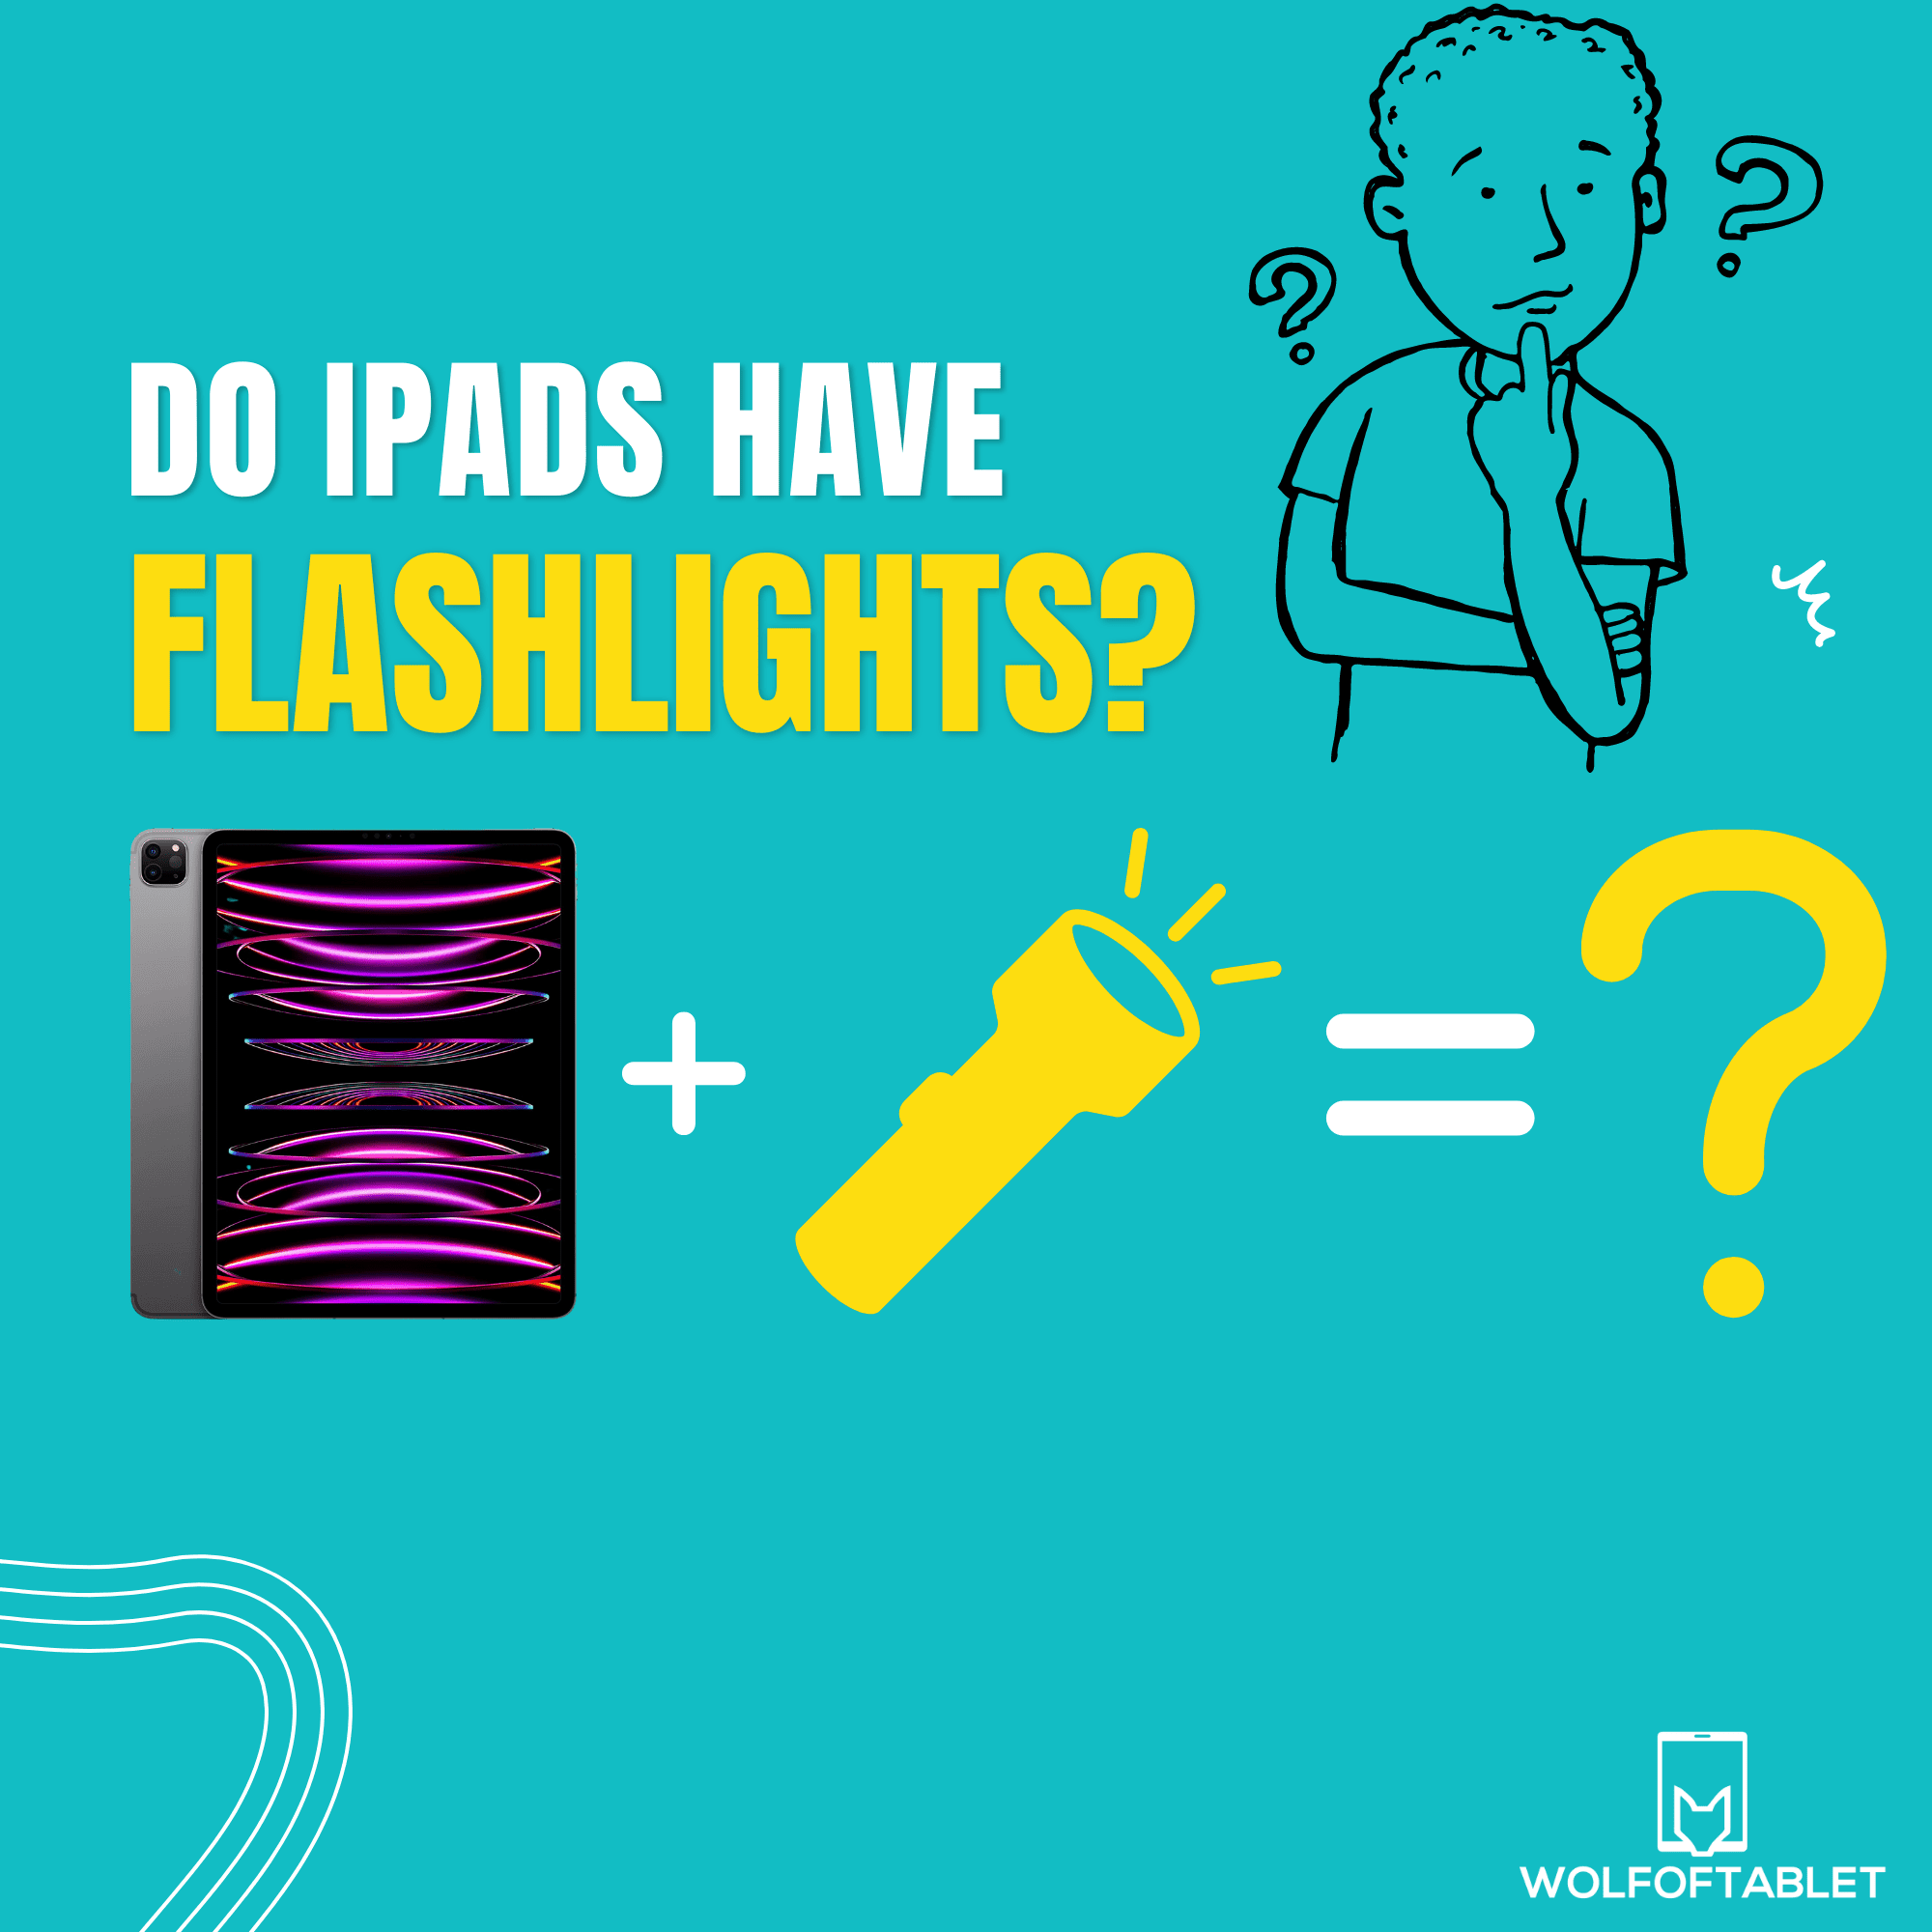 do ipads have flashlights?